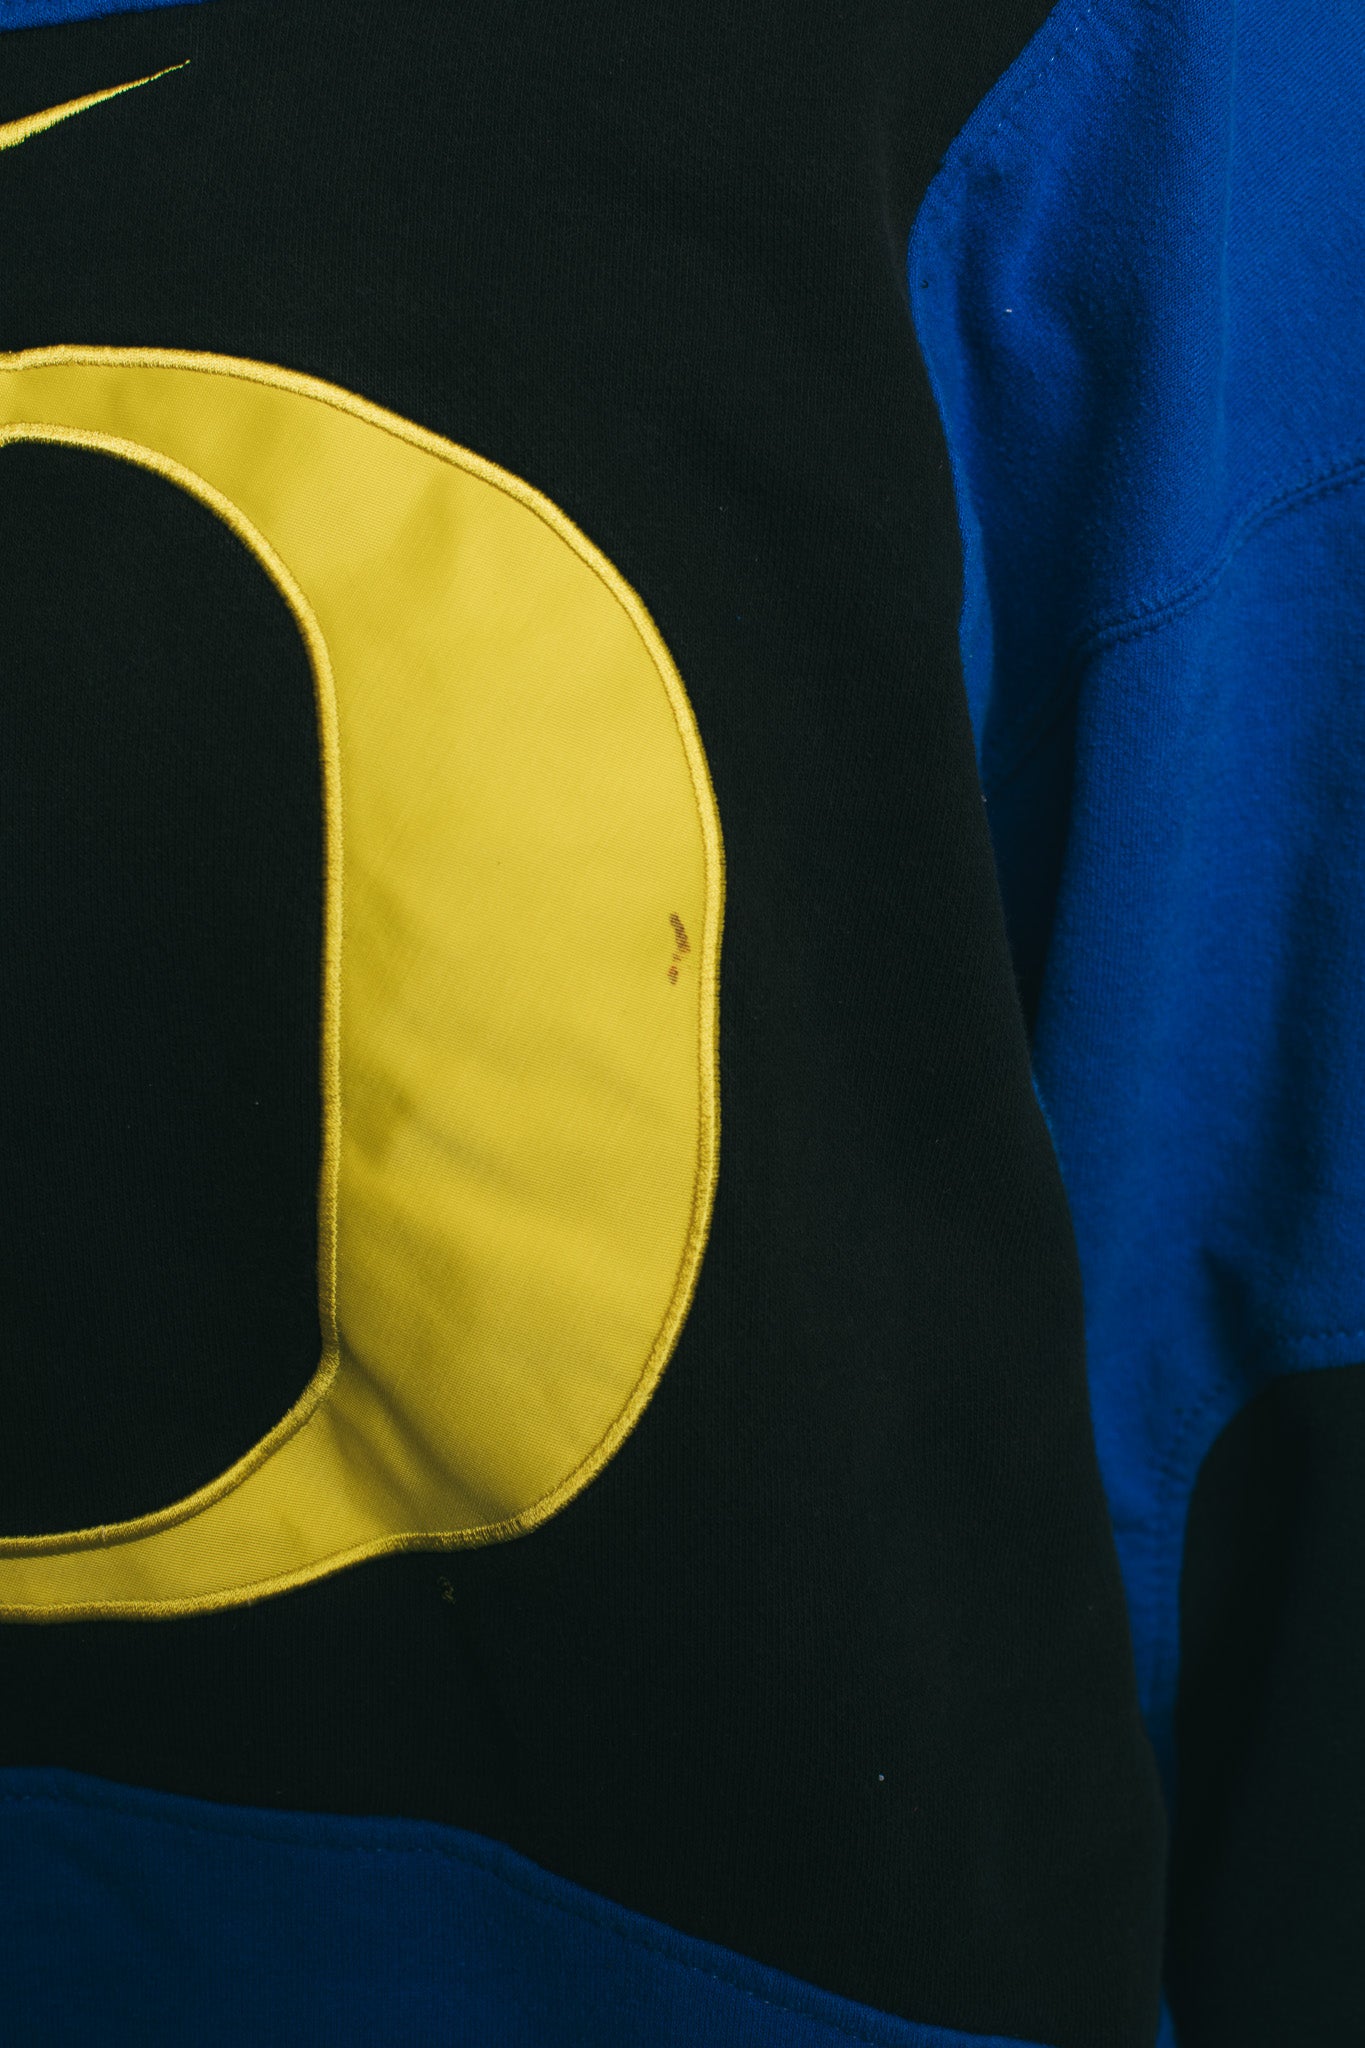 Nike X Oregon - Sweatshirt (L)